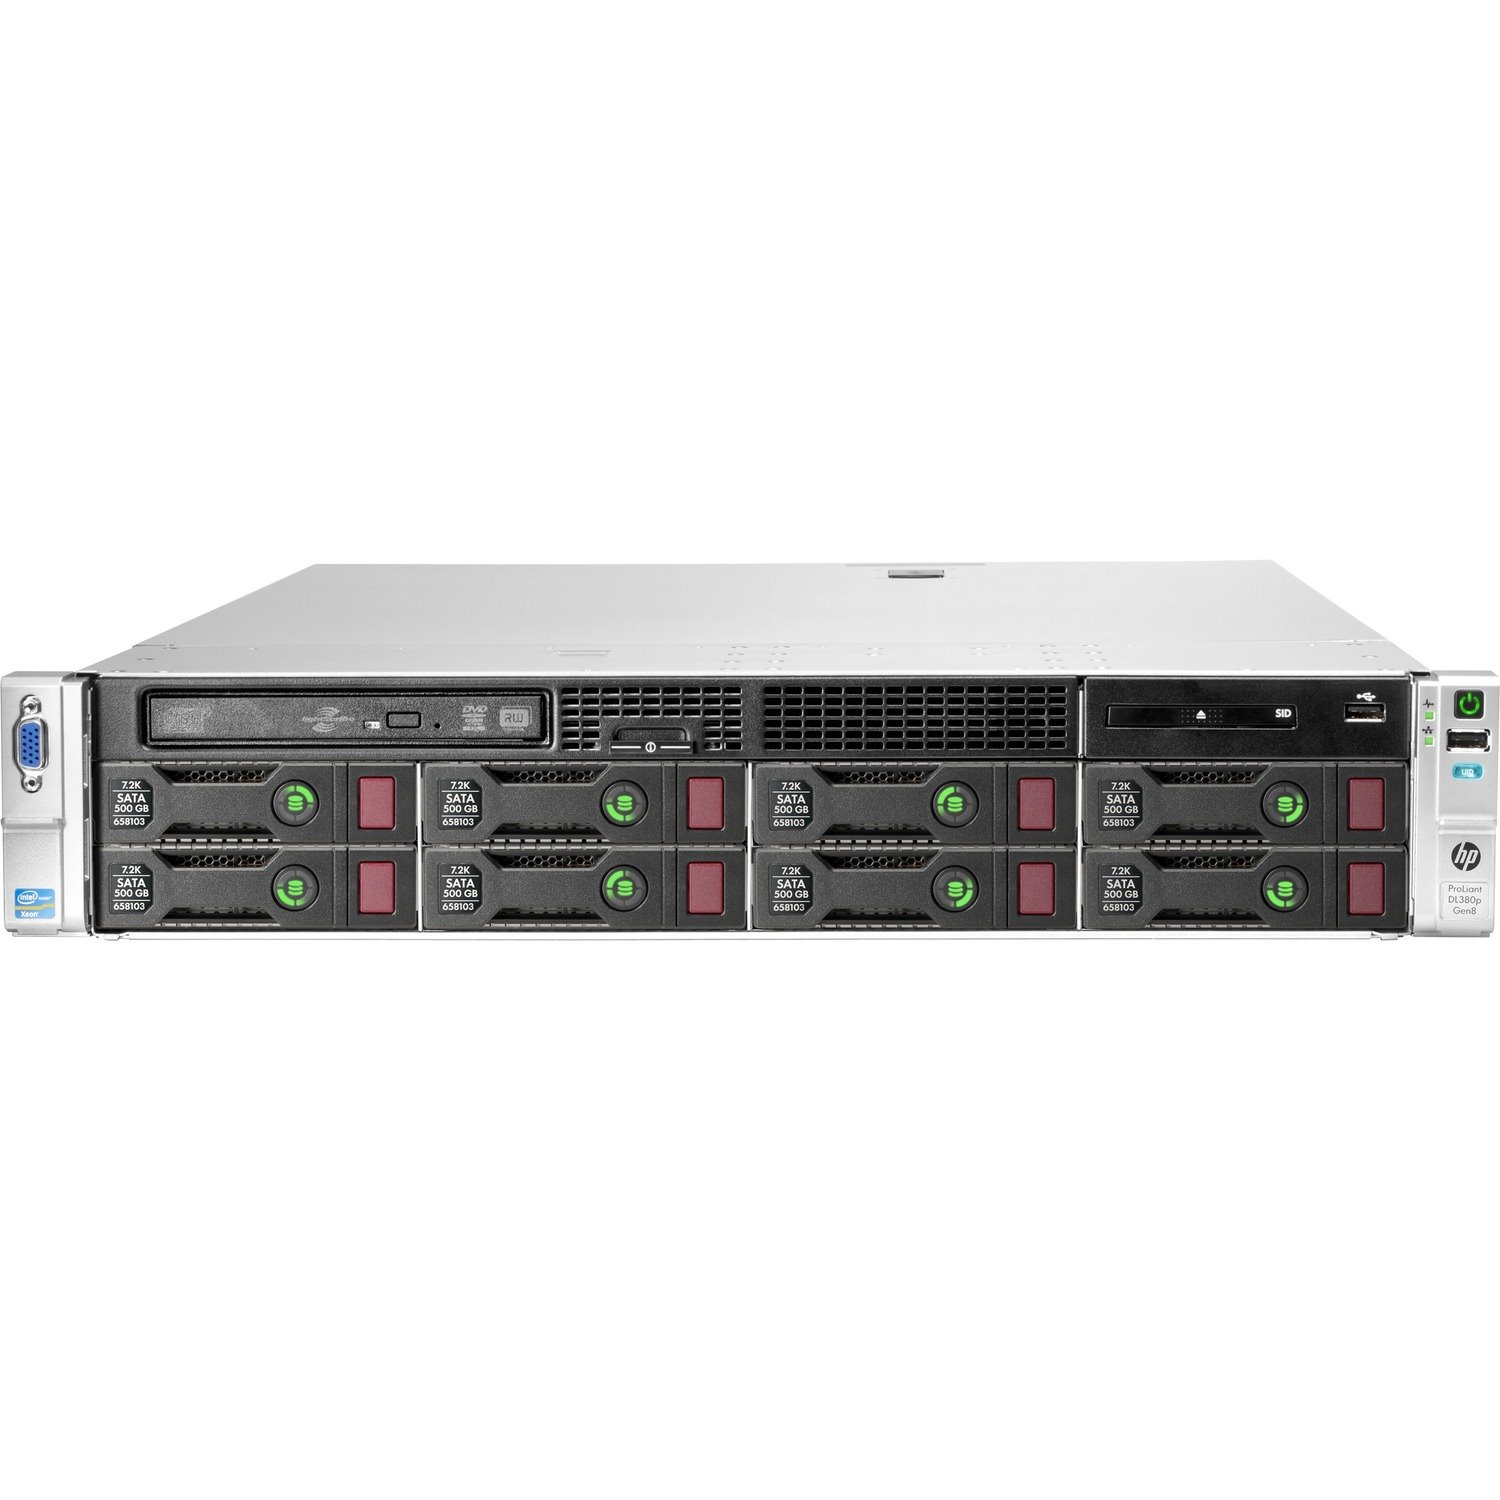 HPE-IMSourcing ProLiant DL380p G8 2U Rack Server - 2 x Intel Xeon E5-2660 2.20 GHz - 32 GB RAM - Serial Attached SCSI (SAS) Controller - Refurbished